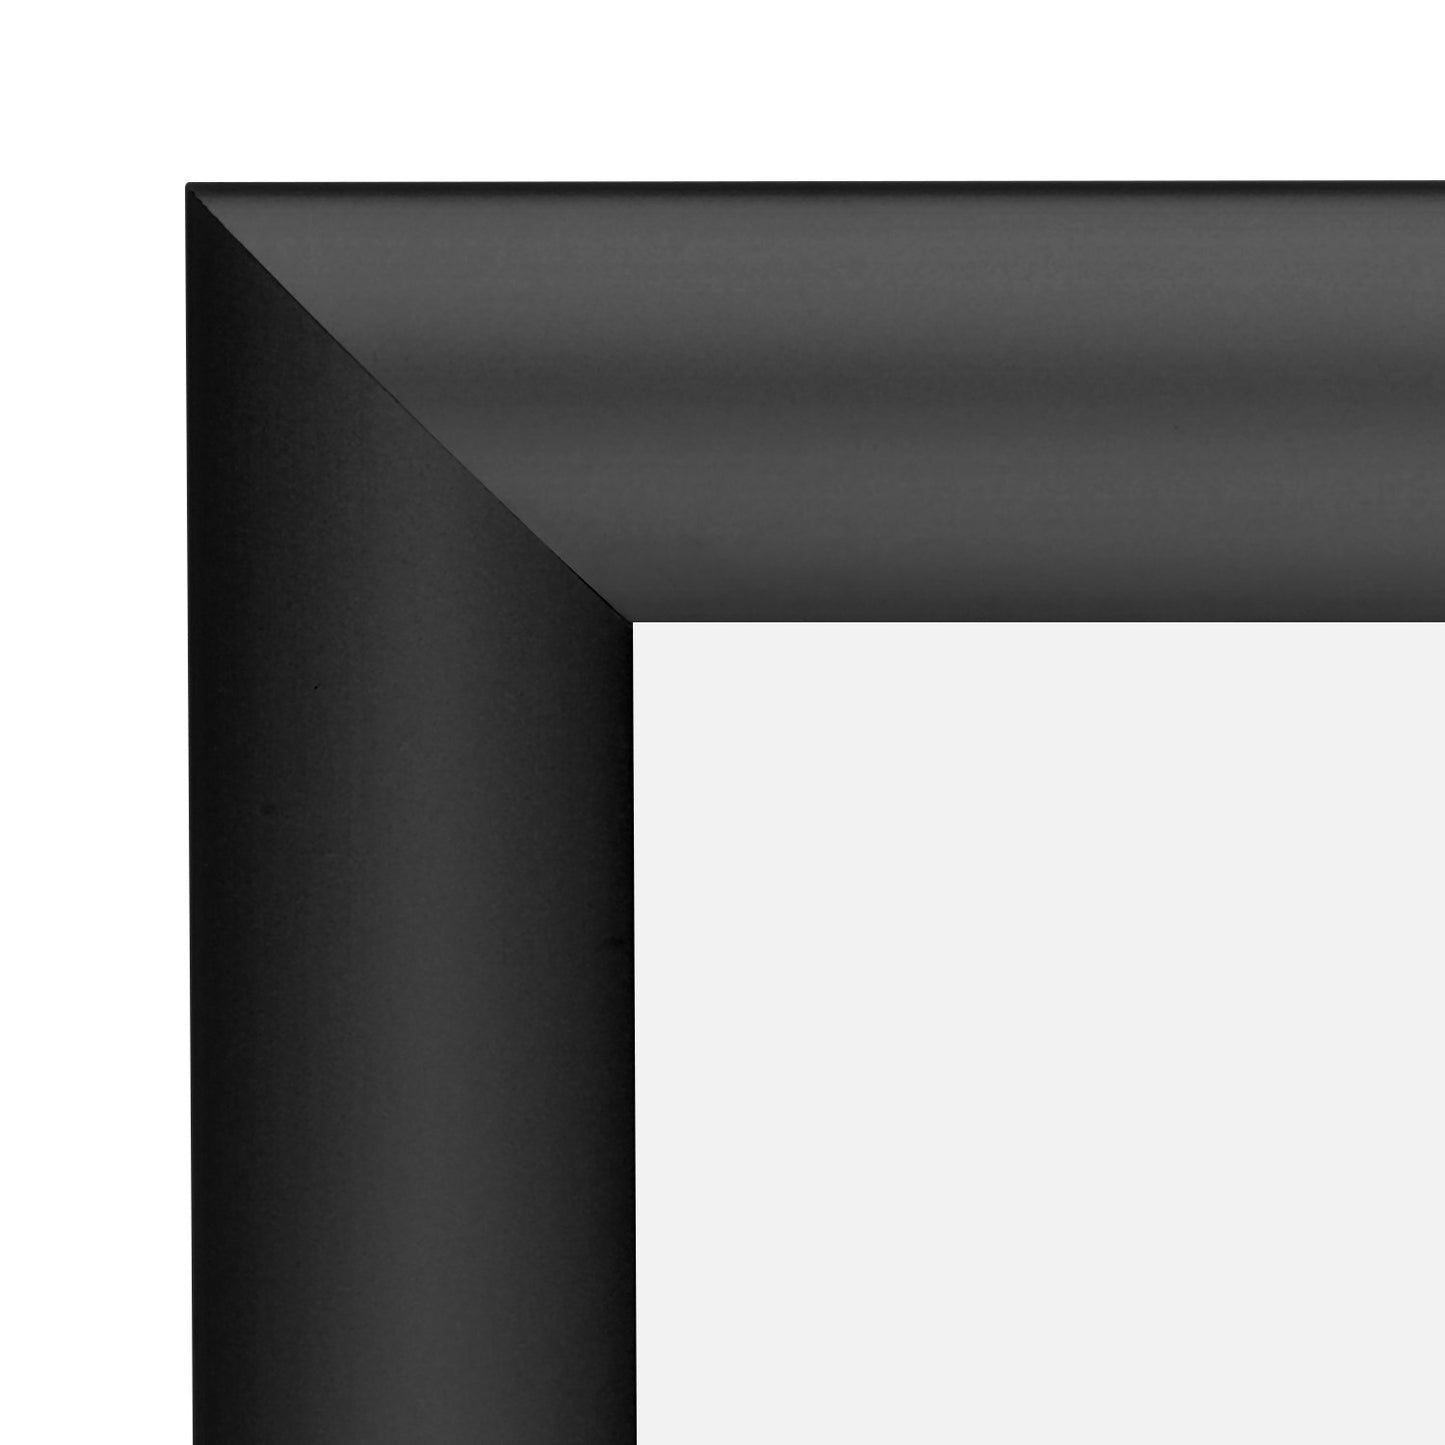 27.94 x 43.18 cm Black Snap Frame - 25MM Profile – SnapeZo.Utility